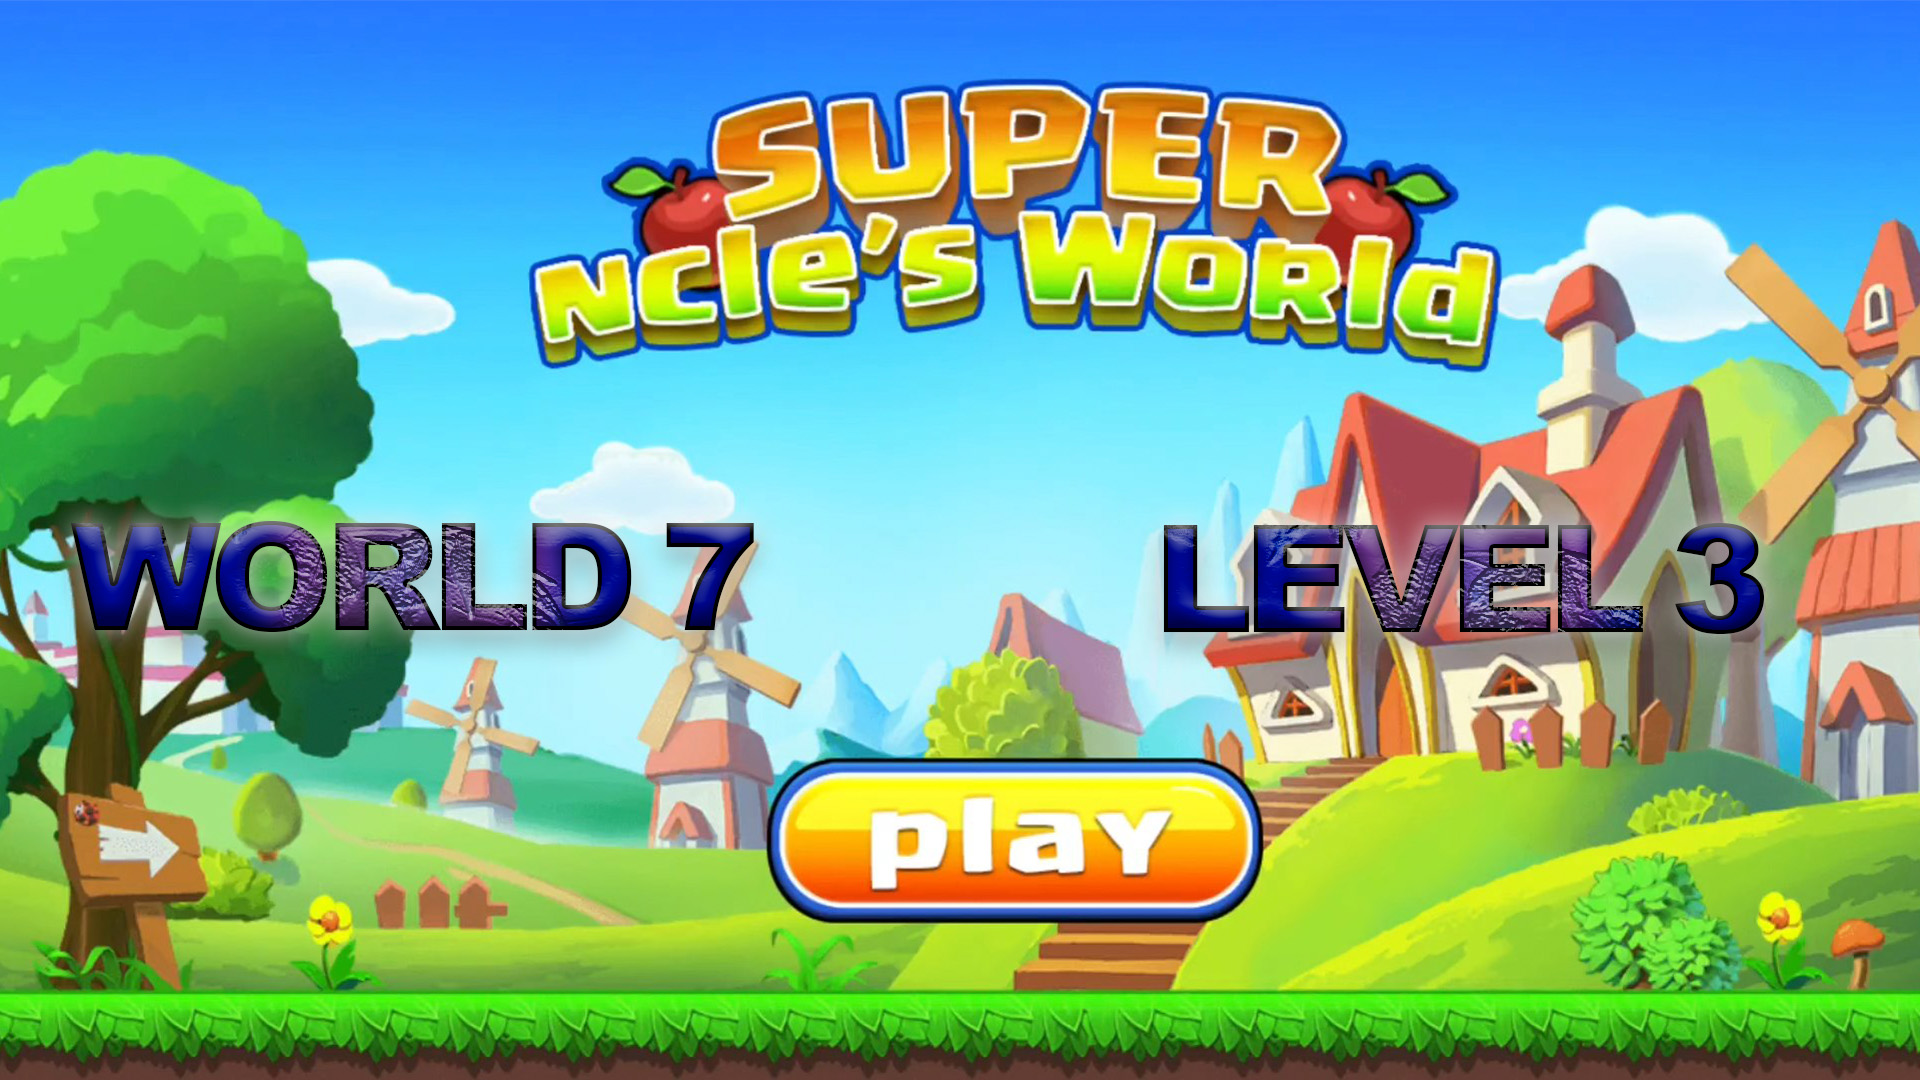 Super ncle's  World 7. Level 3.